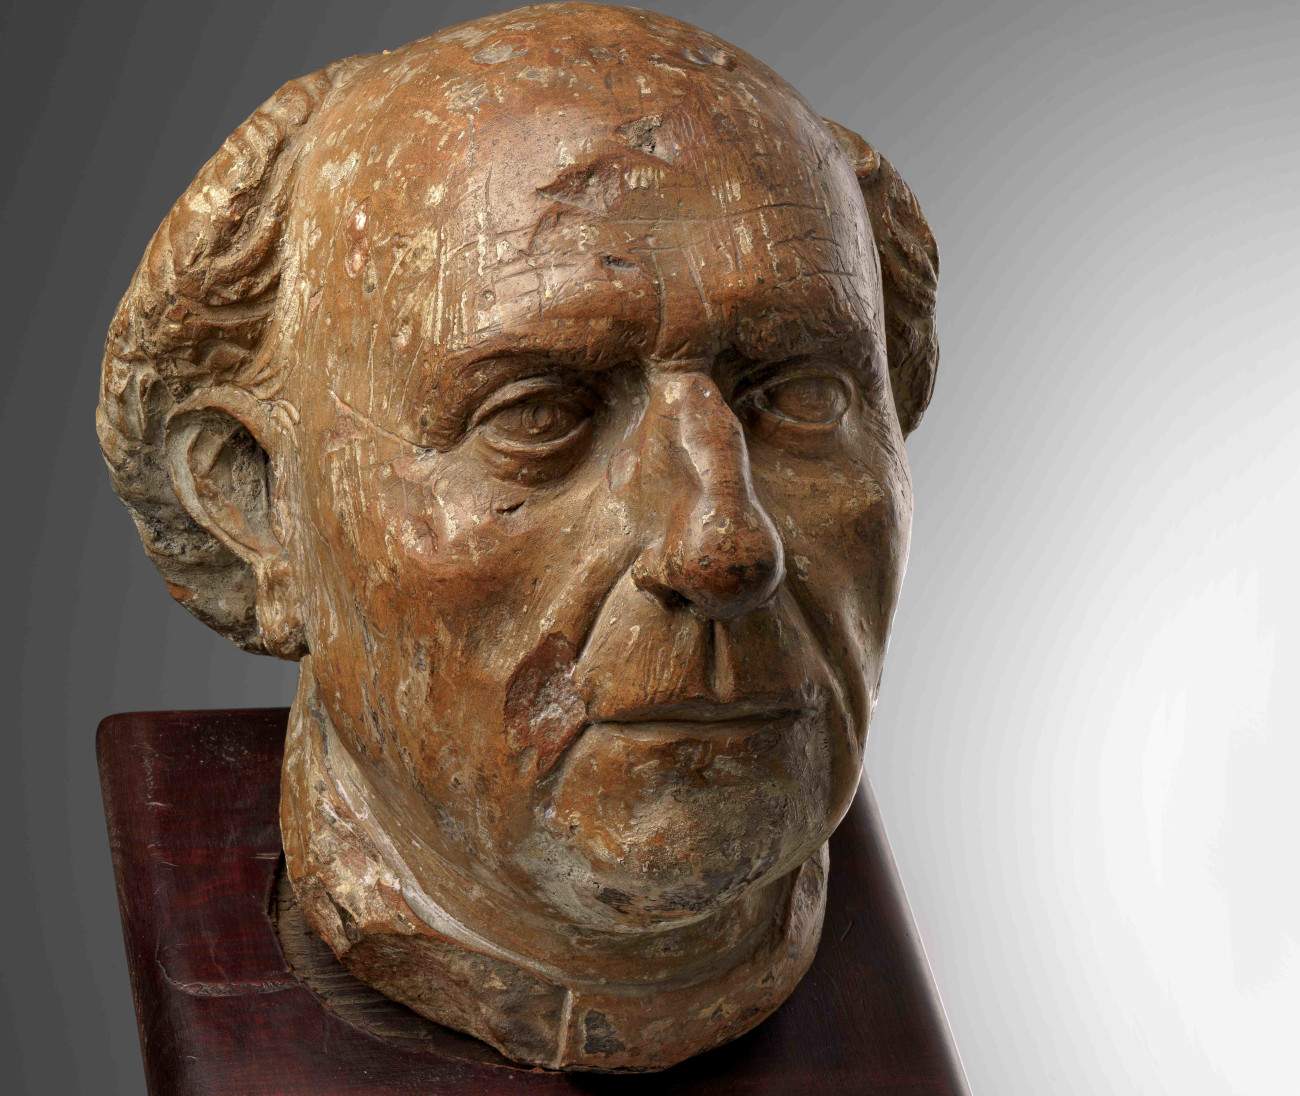 Undiscovered early Renaissance sculpture depicting Filippo Brunelleschi